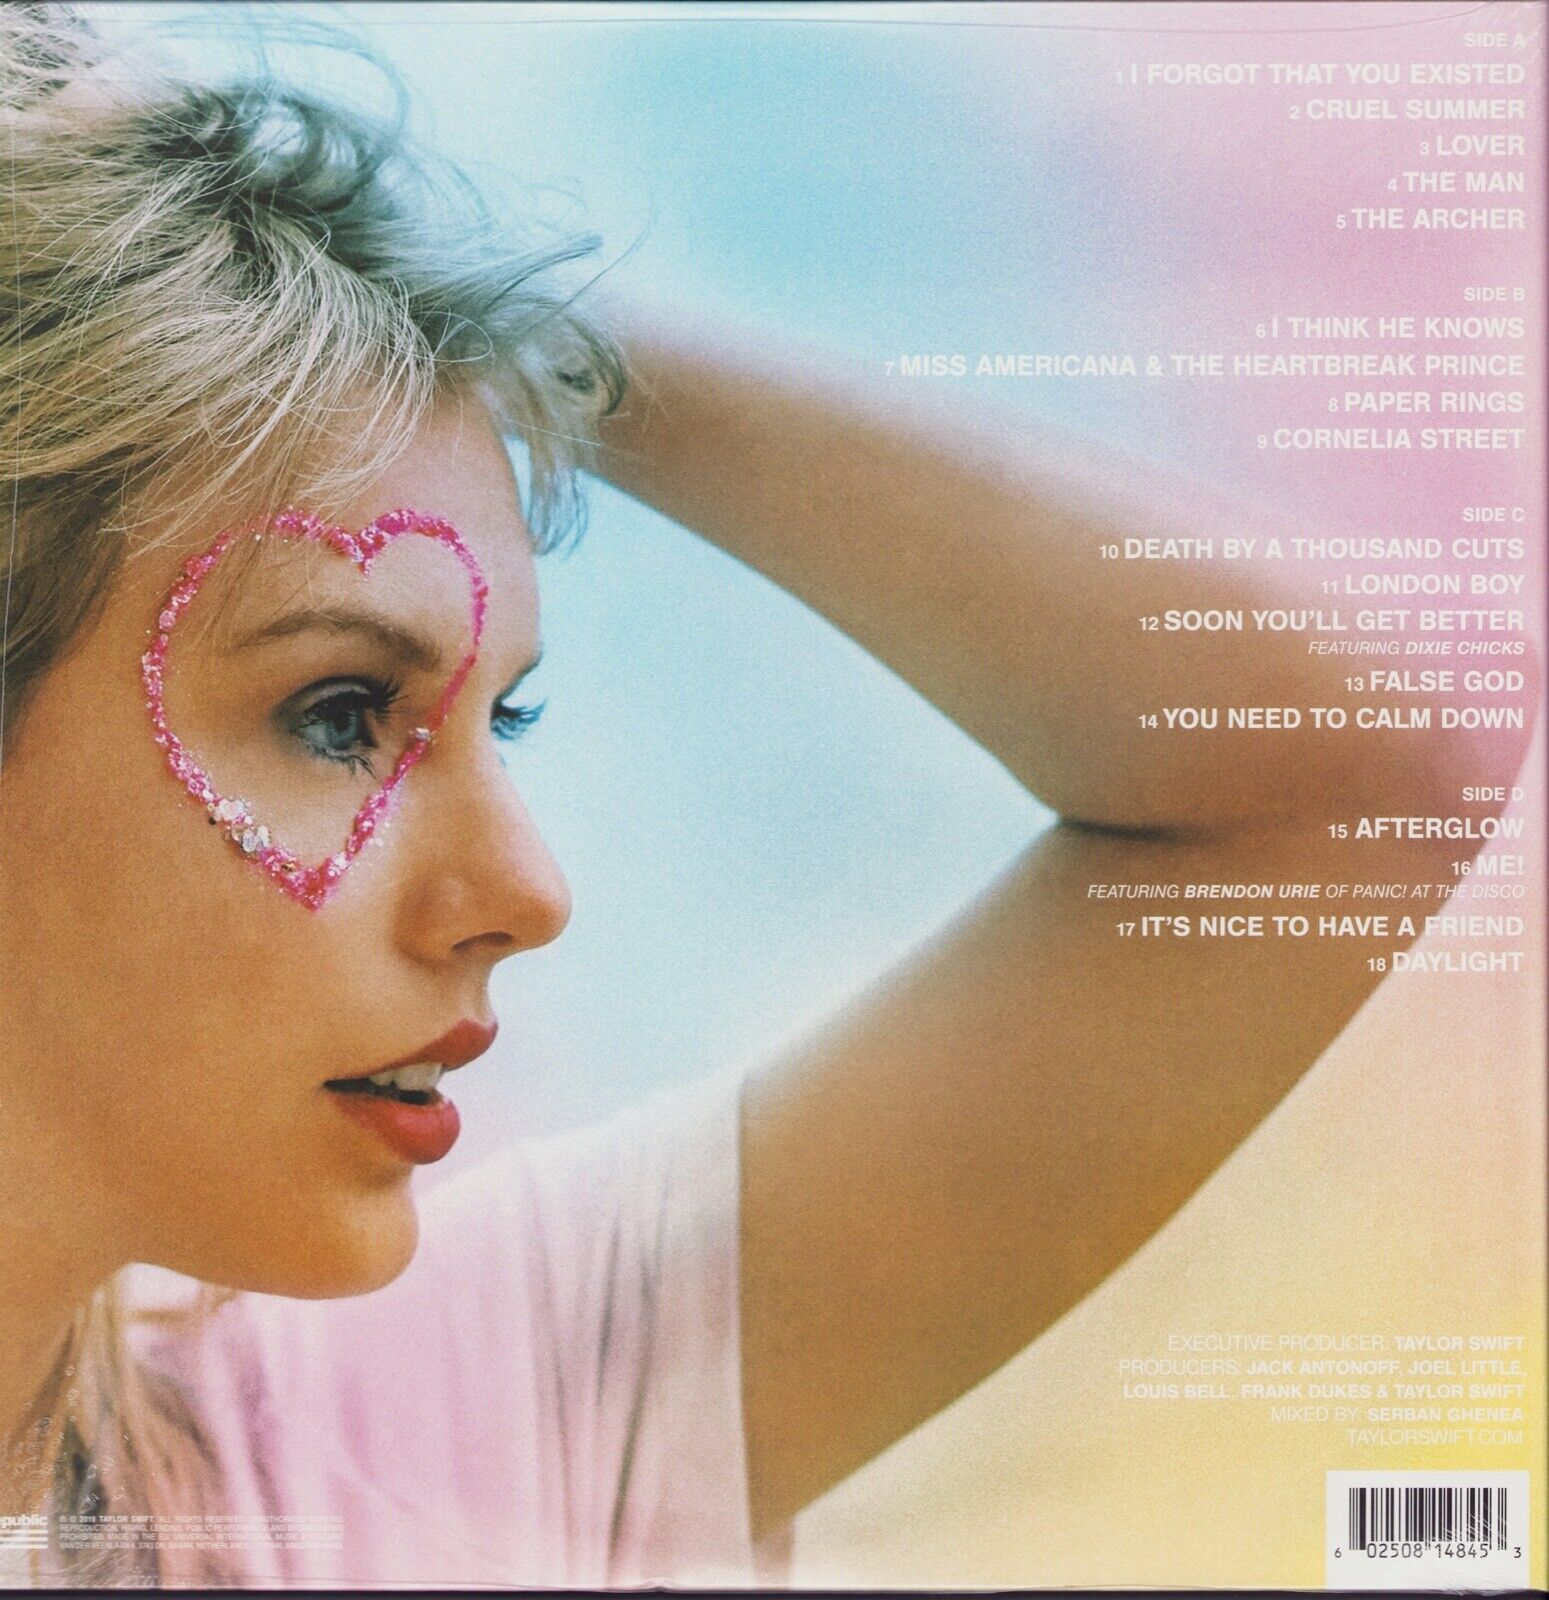 Taylor Swift - Lover Baby Pink & Light Blue Translucent Vinyl 2LP